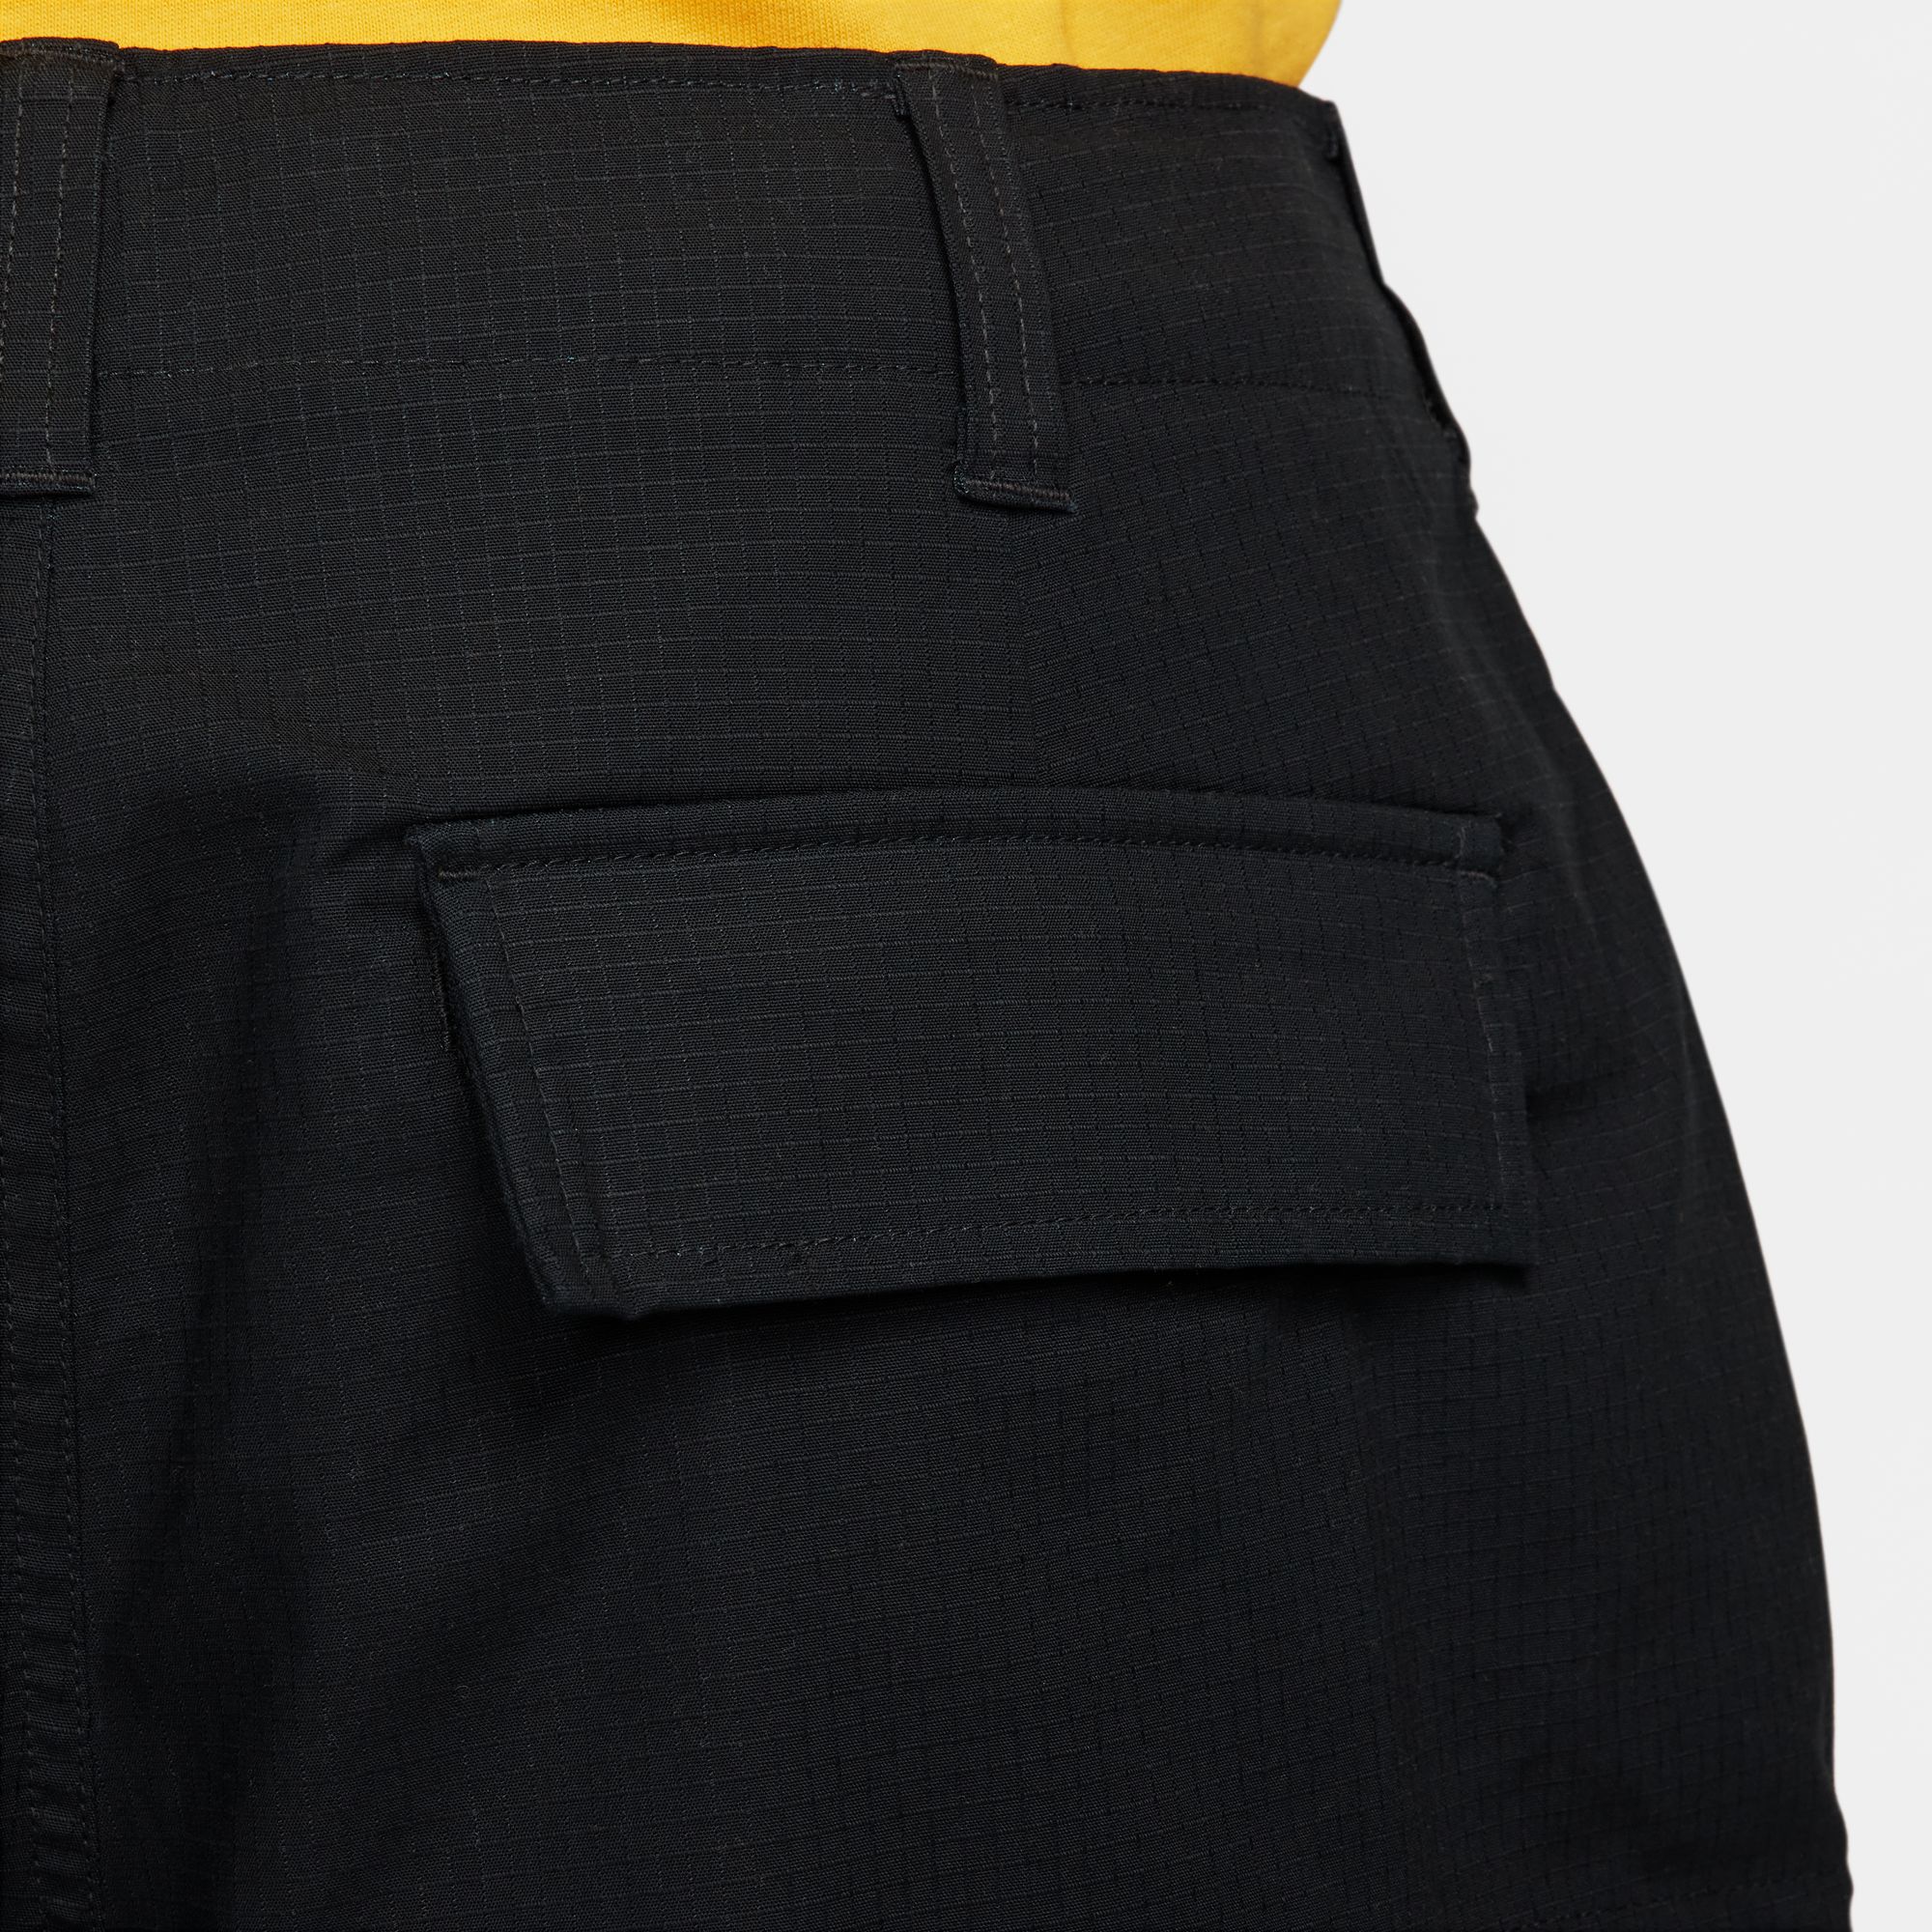 Nike SB Kearny Men's Cargo Skate Shorts Black